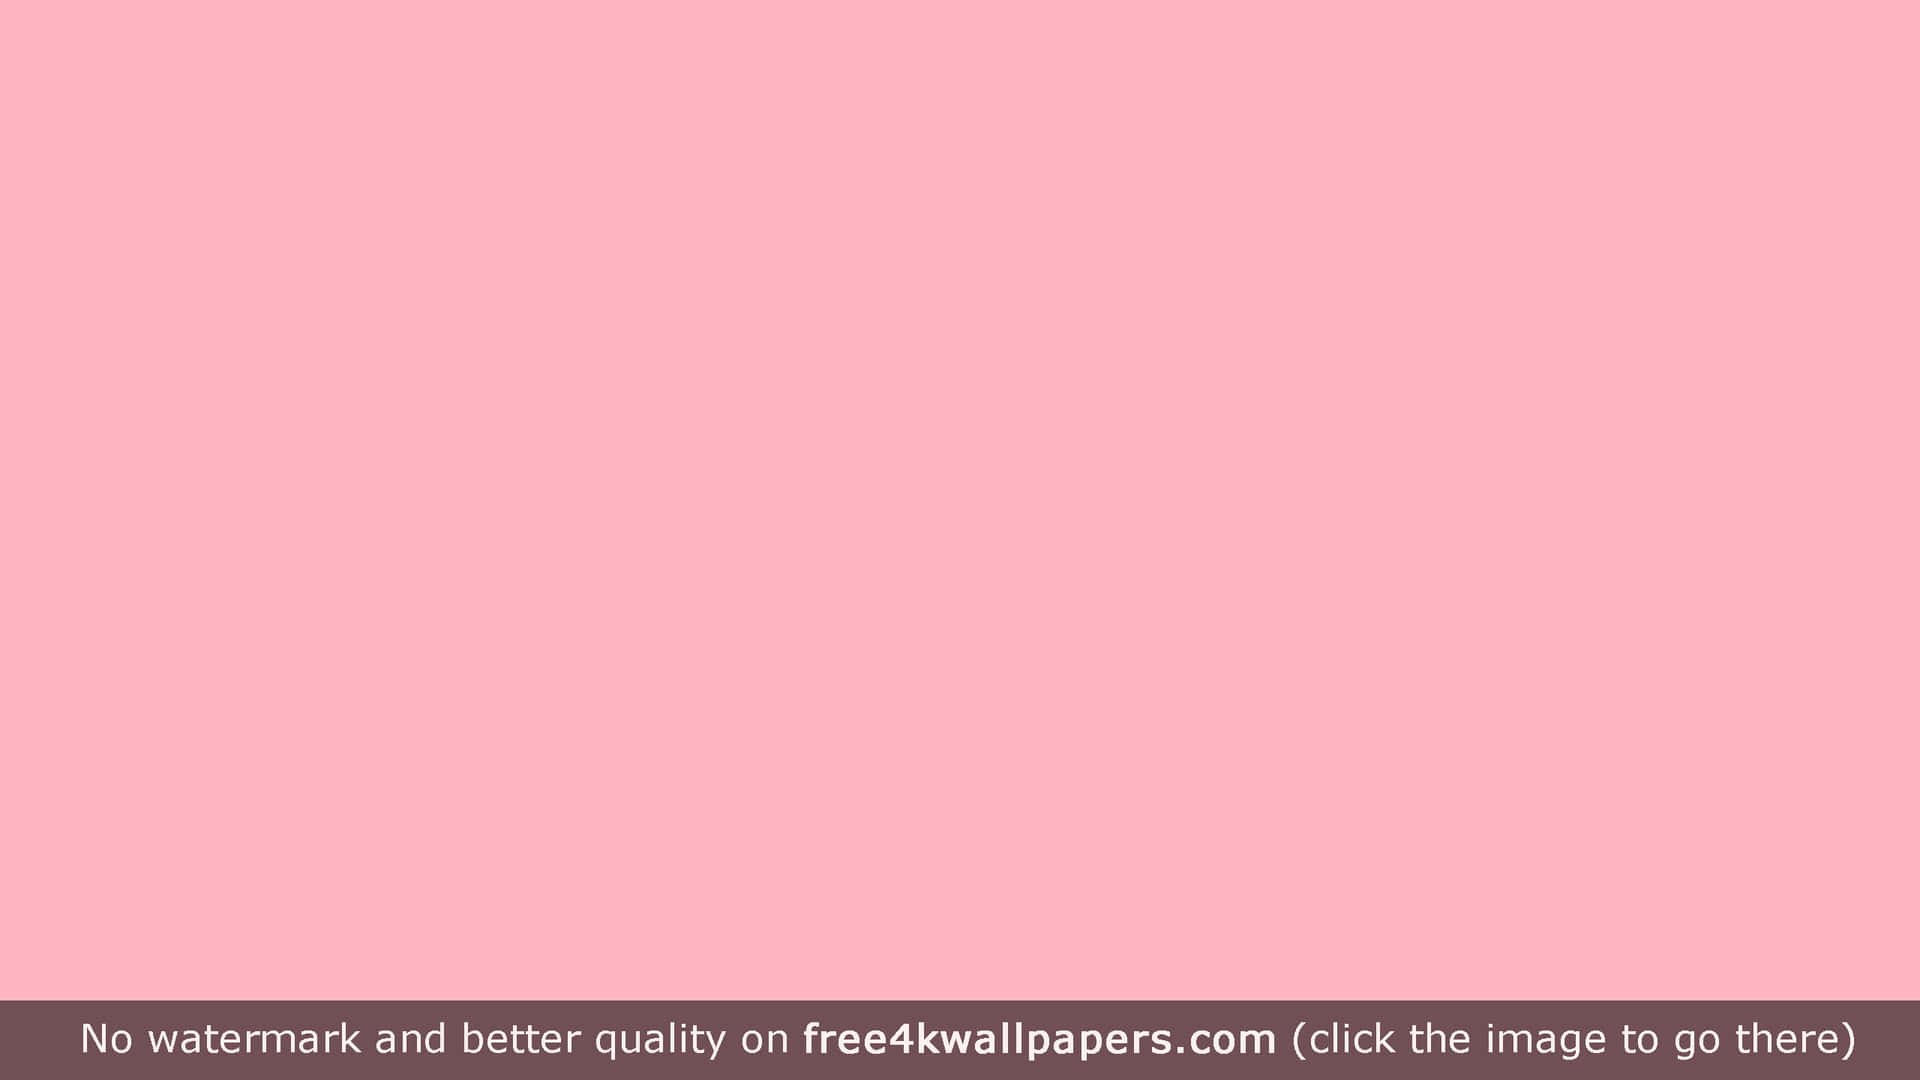 Rejuvenate your workspace with this calming pink desktop wallpaper. Wallpaper